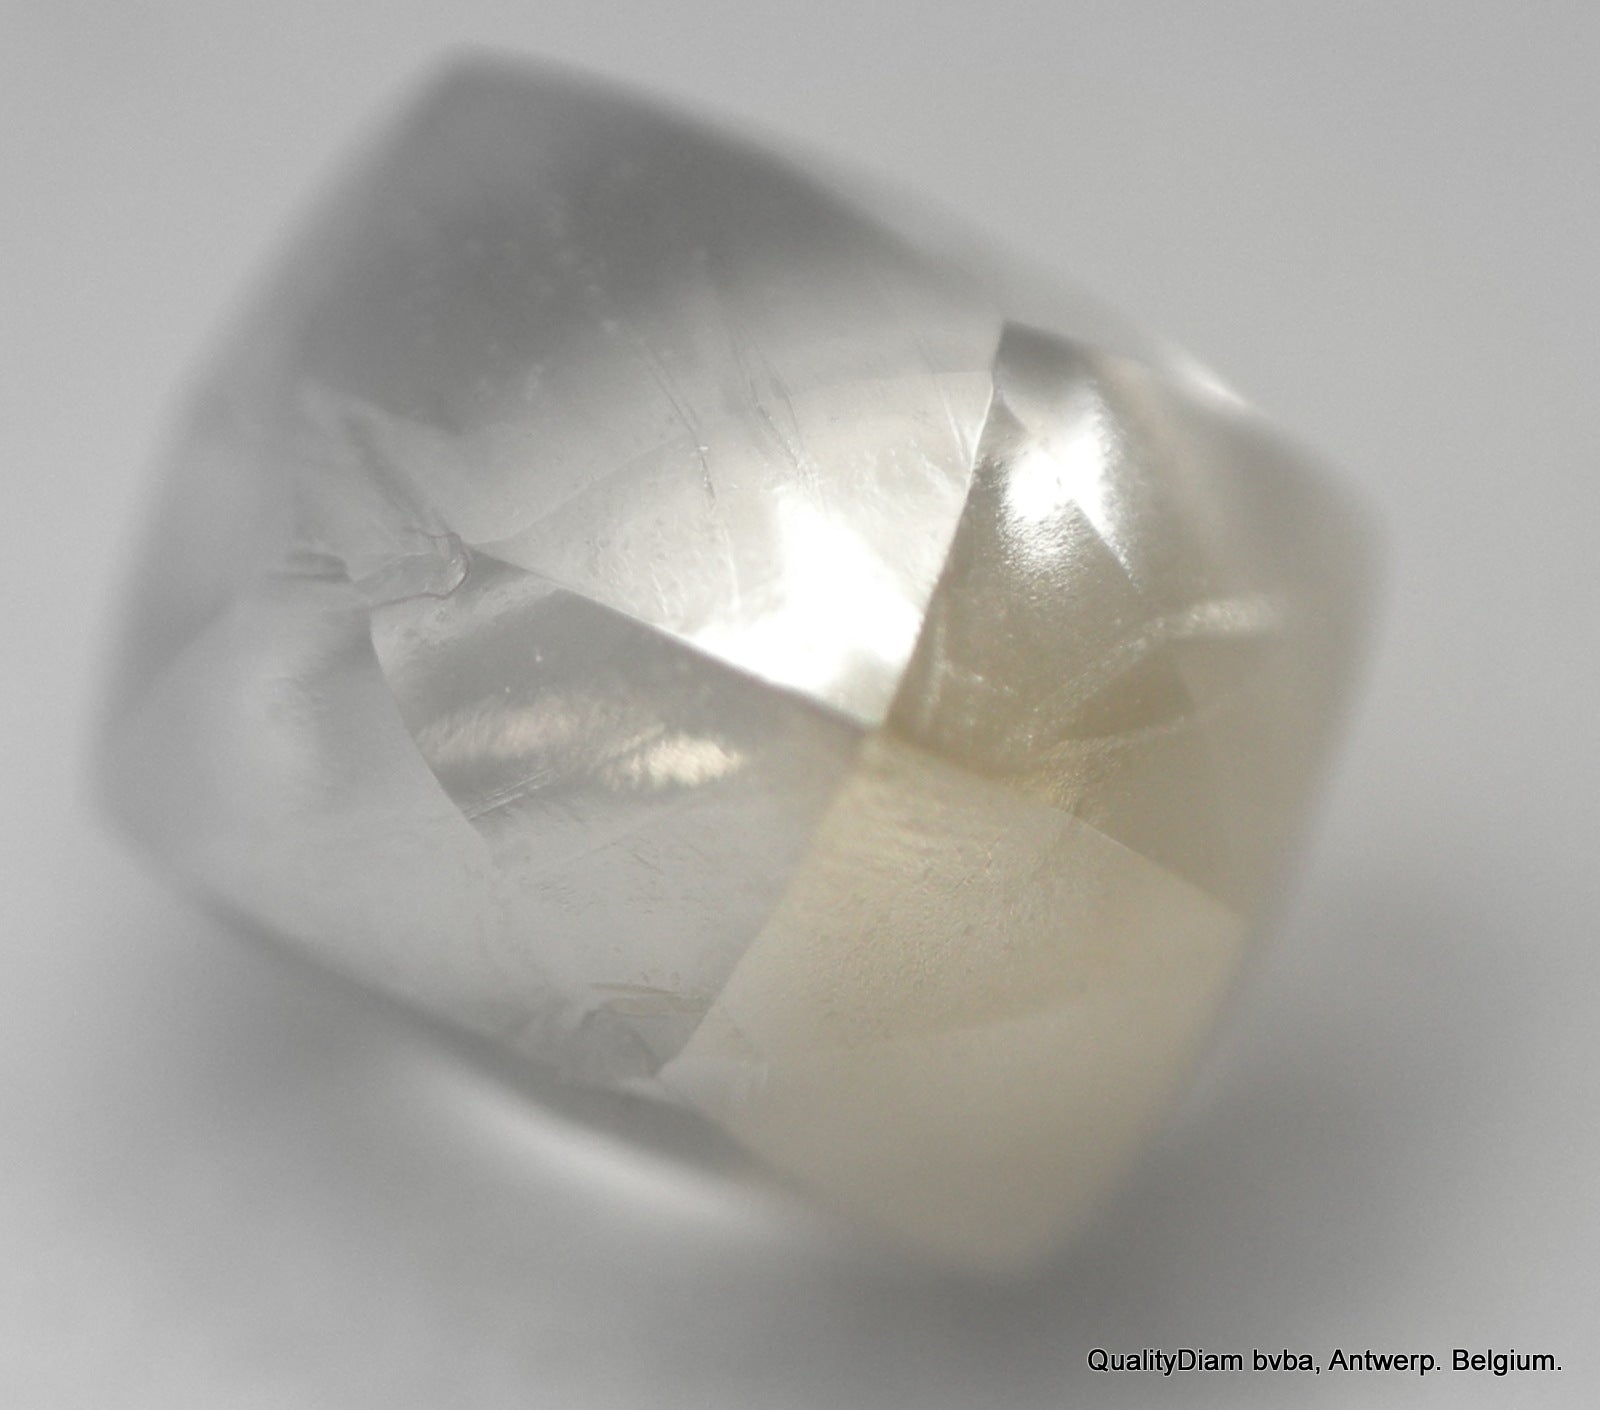 I VS1 Genuine rough diamond with Extraordinary brilliance and white color